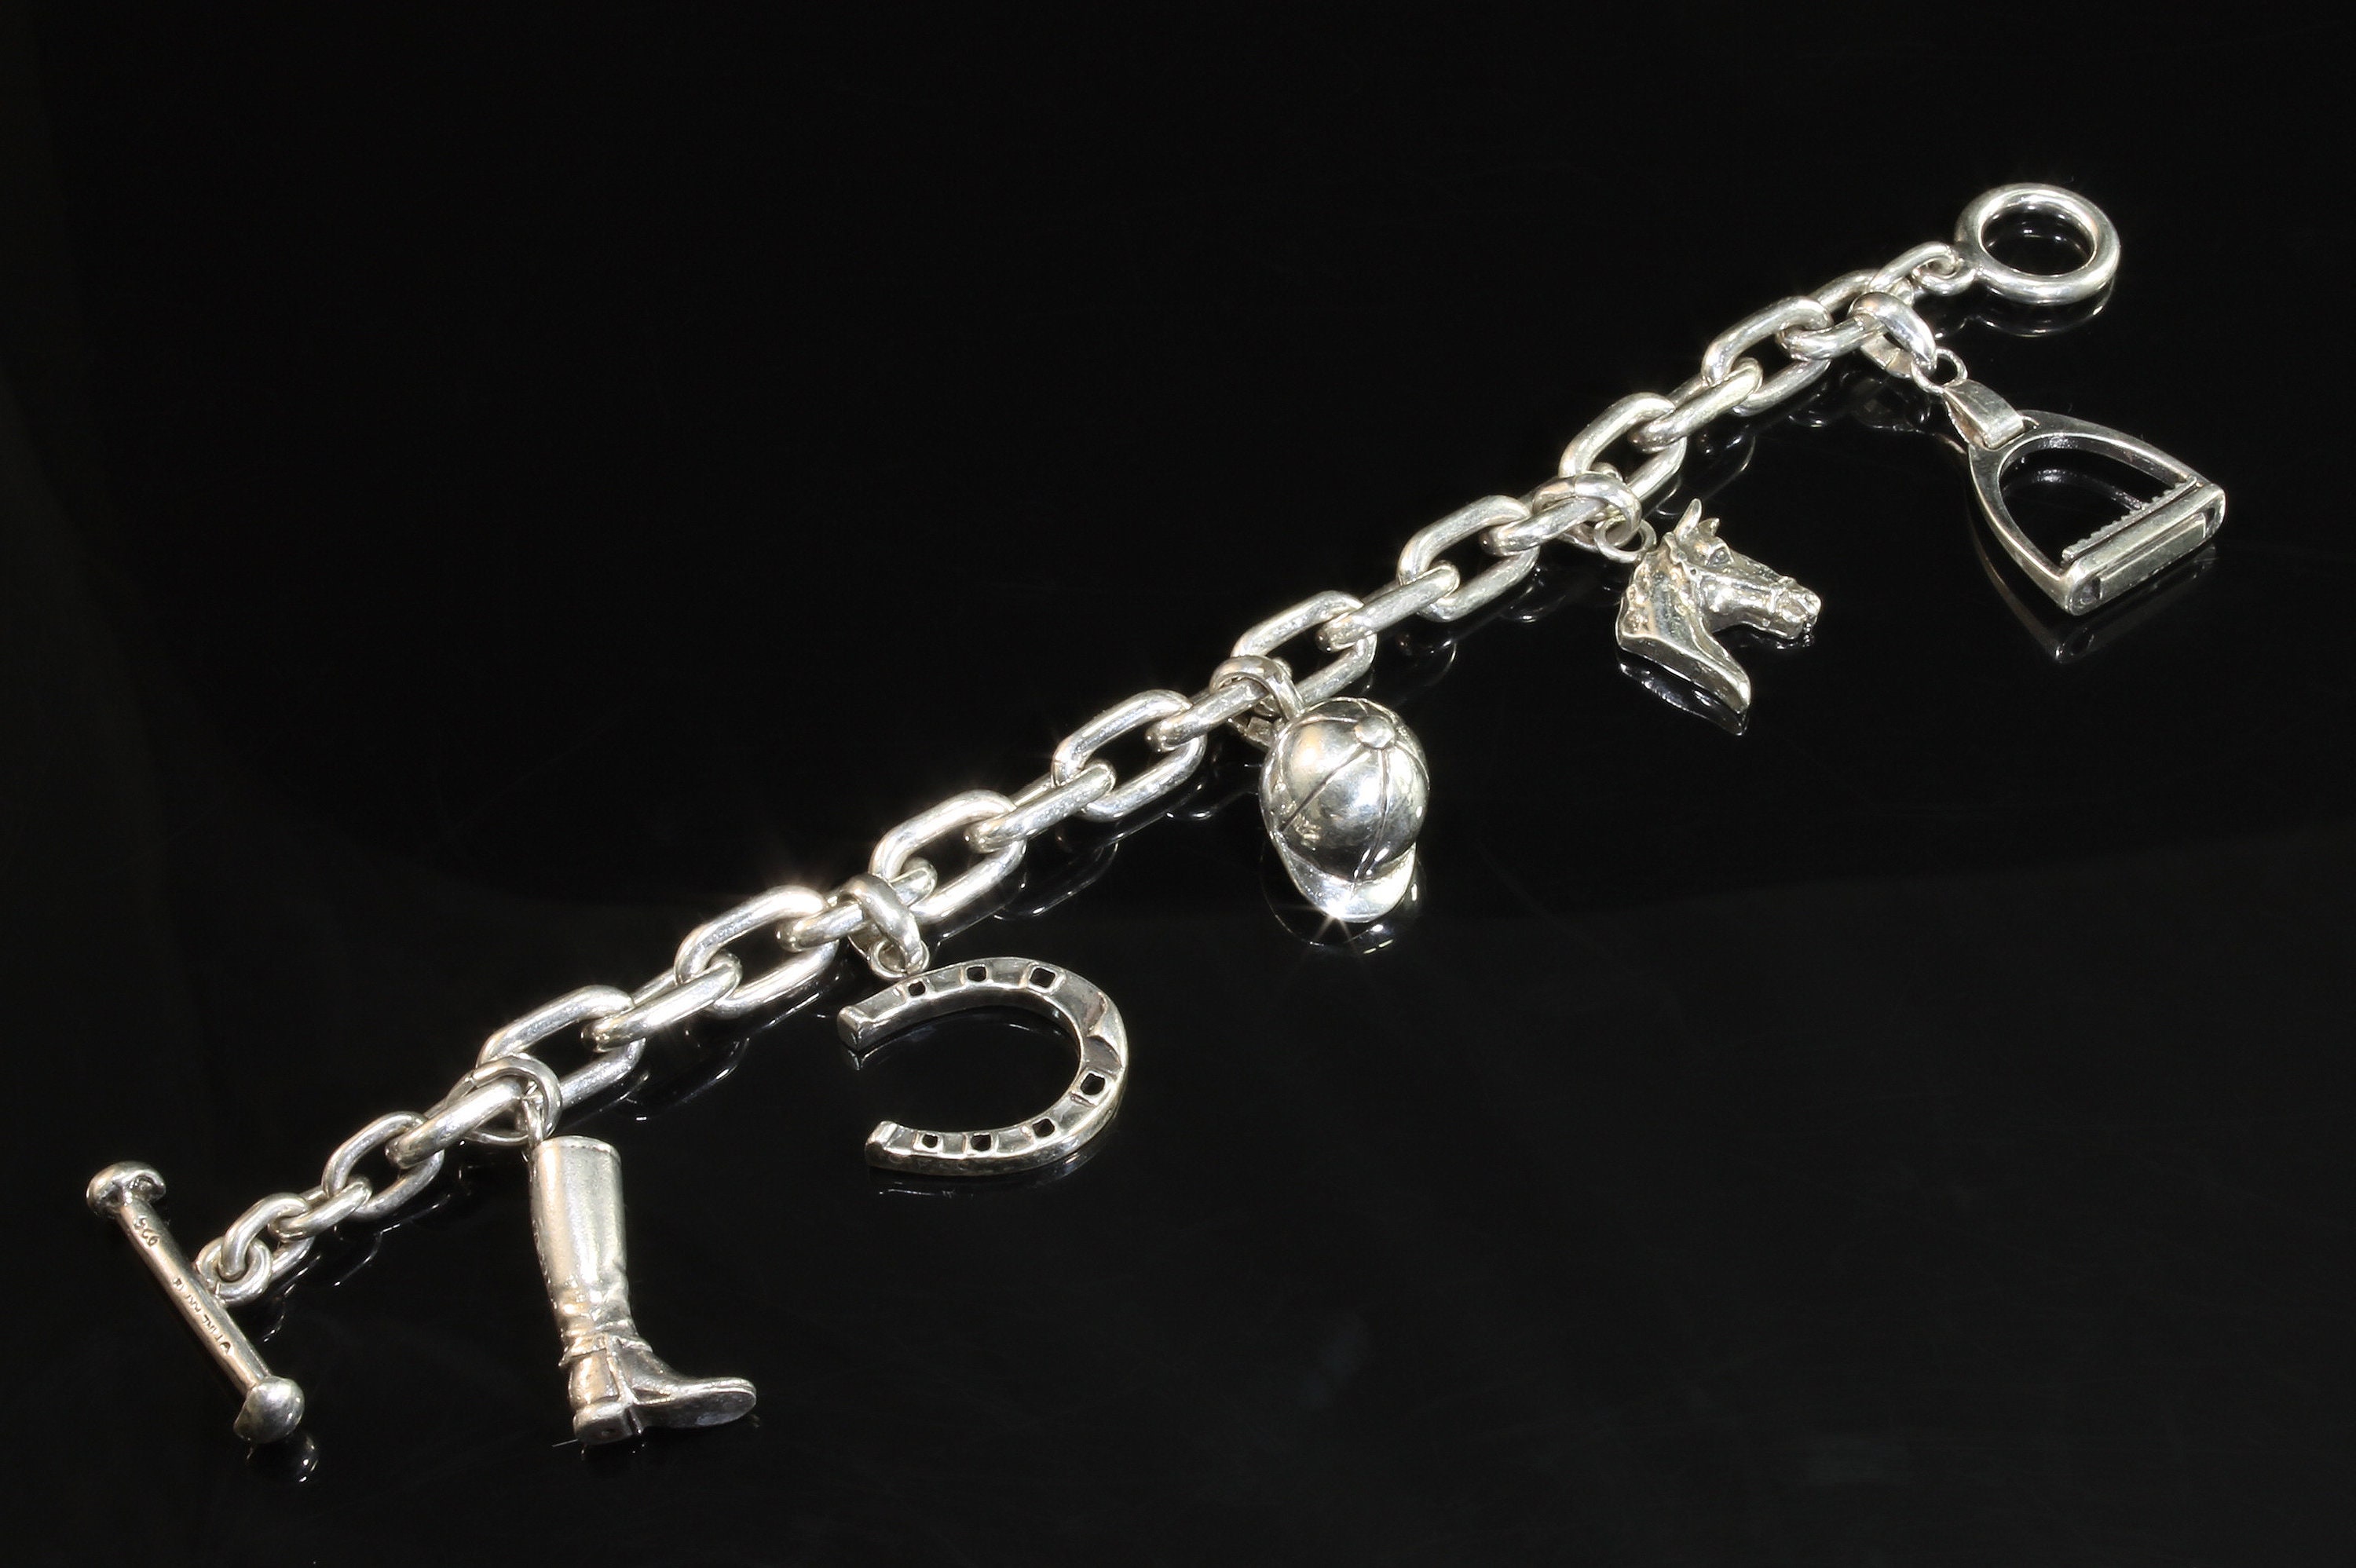 Equestrian Charm Bracelet Sterling Silver Jewelry, Horse Jewelry